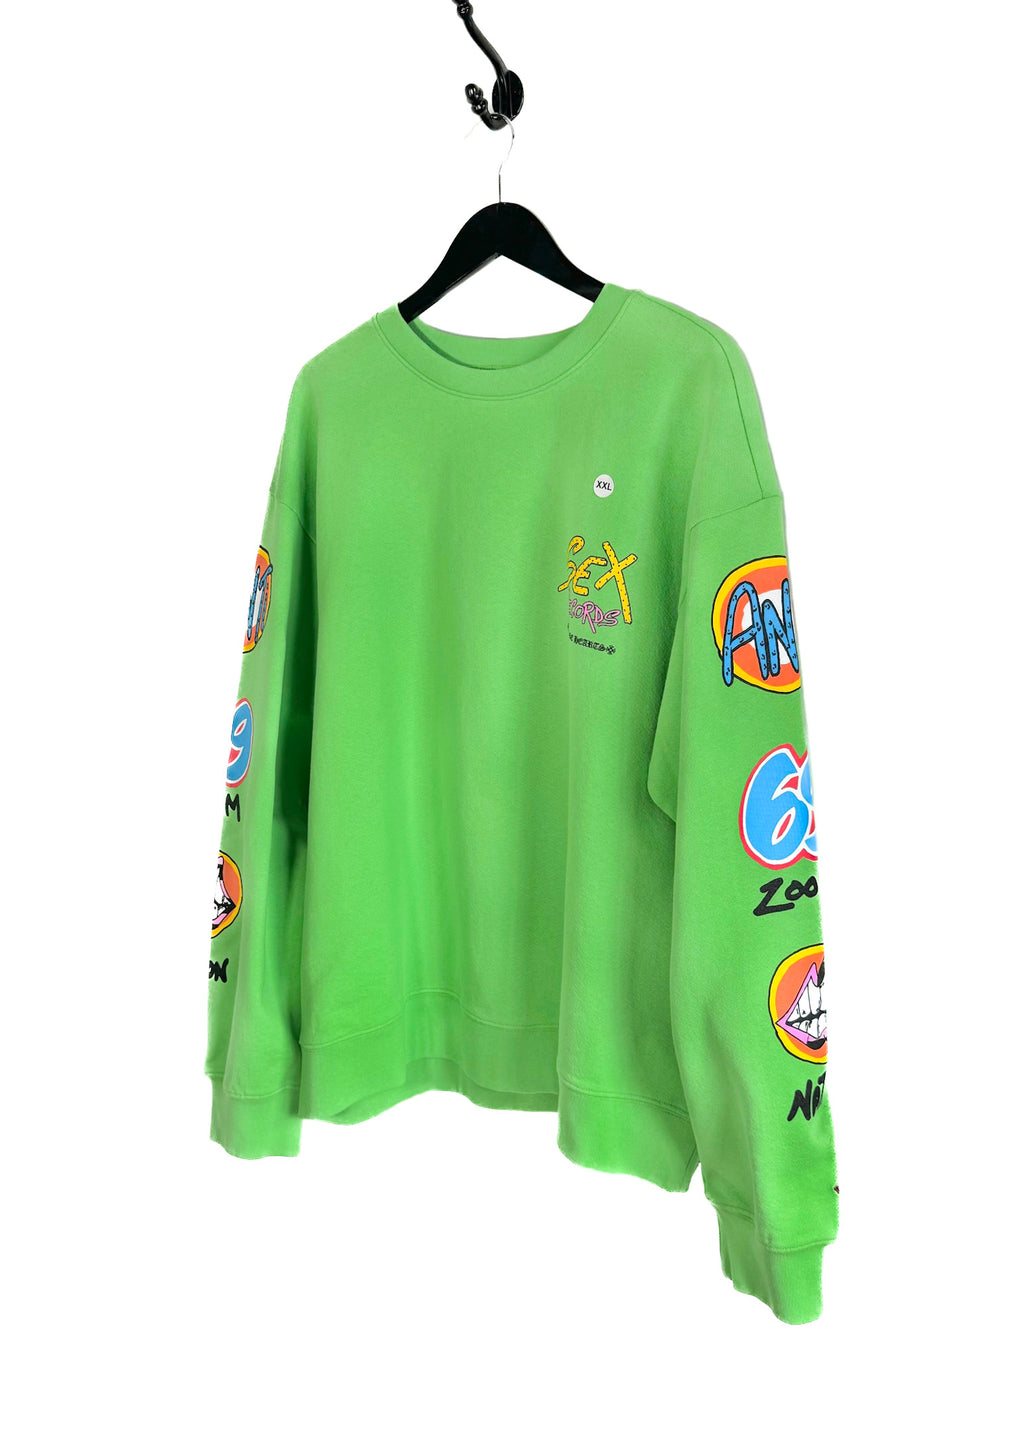 Chrome Hearts Matty Boy Sex Records Neon Green Sweatshirt